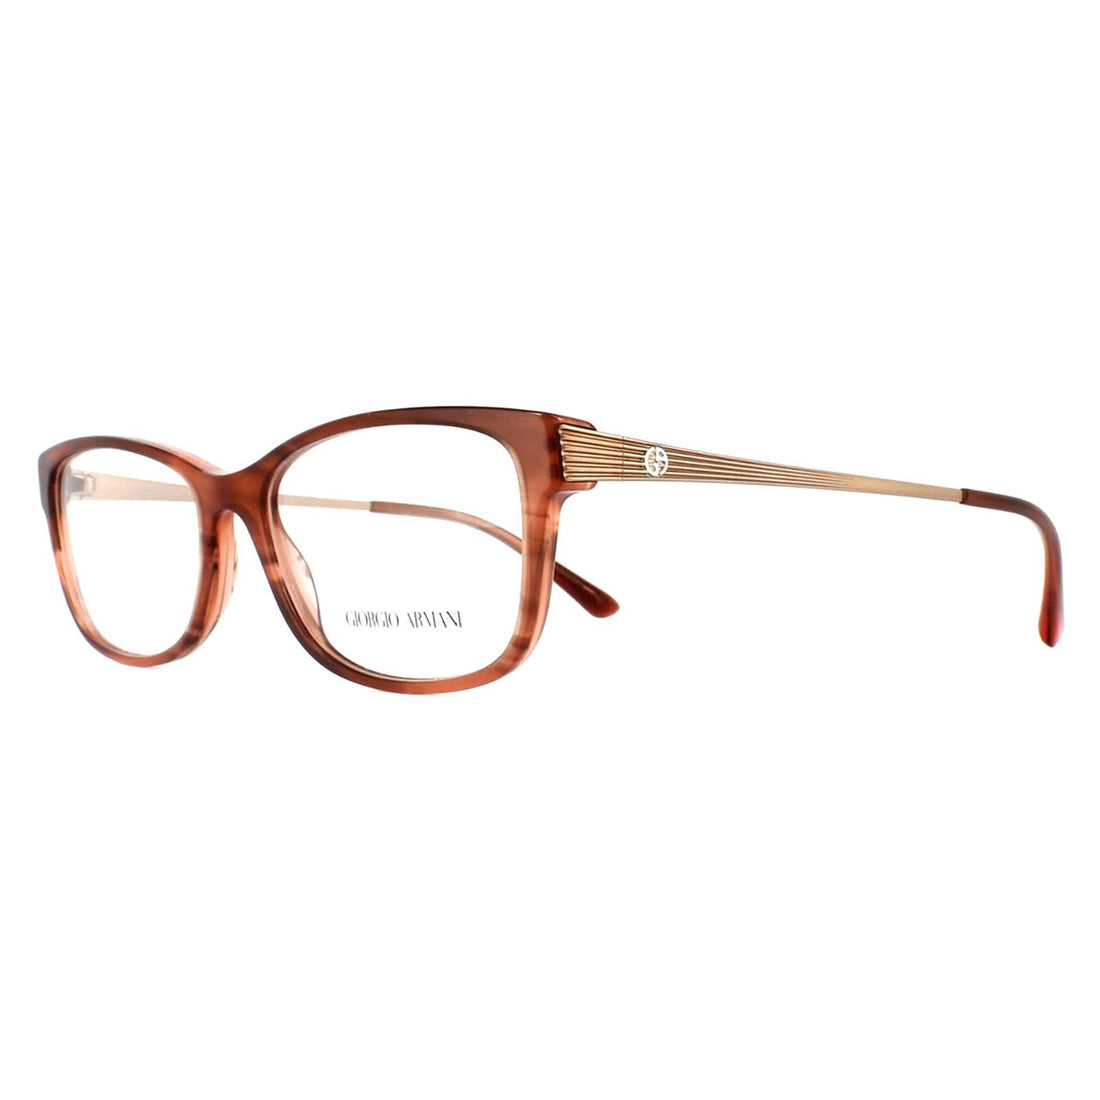 Giorgio Armani 7098 Glasses Frames